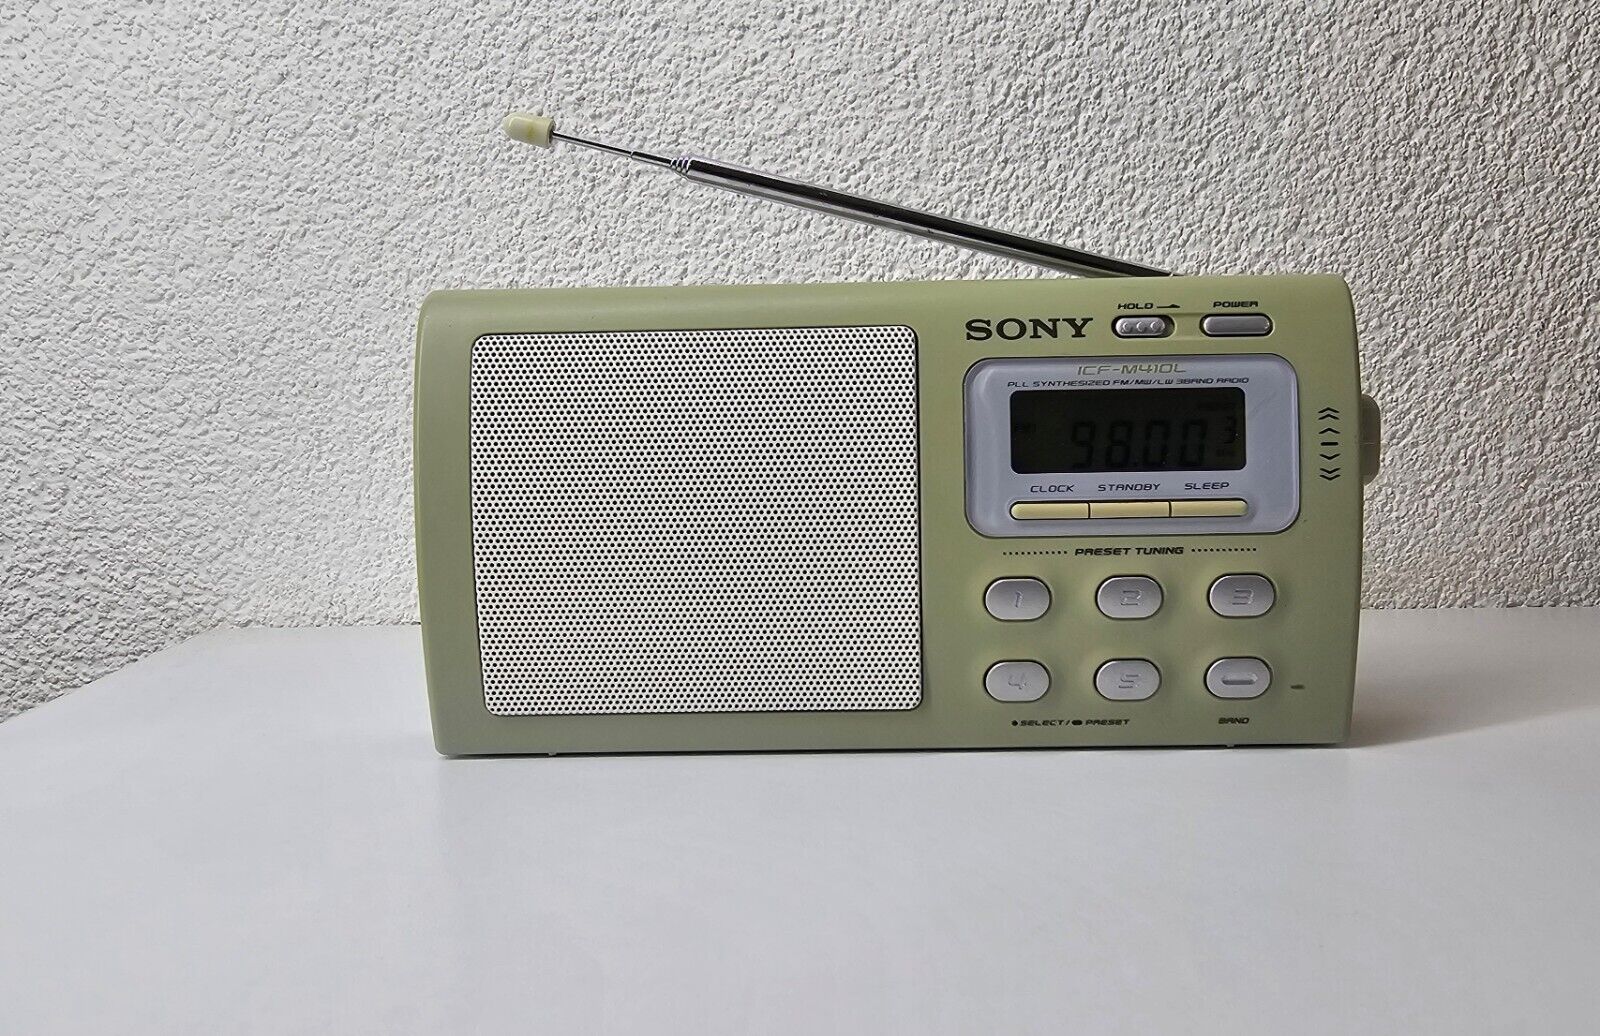 SONY ICF-M410L 3Band Portable Radio